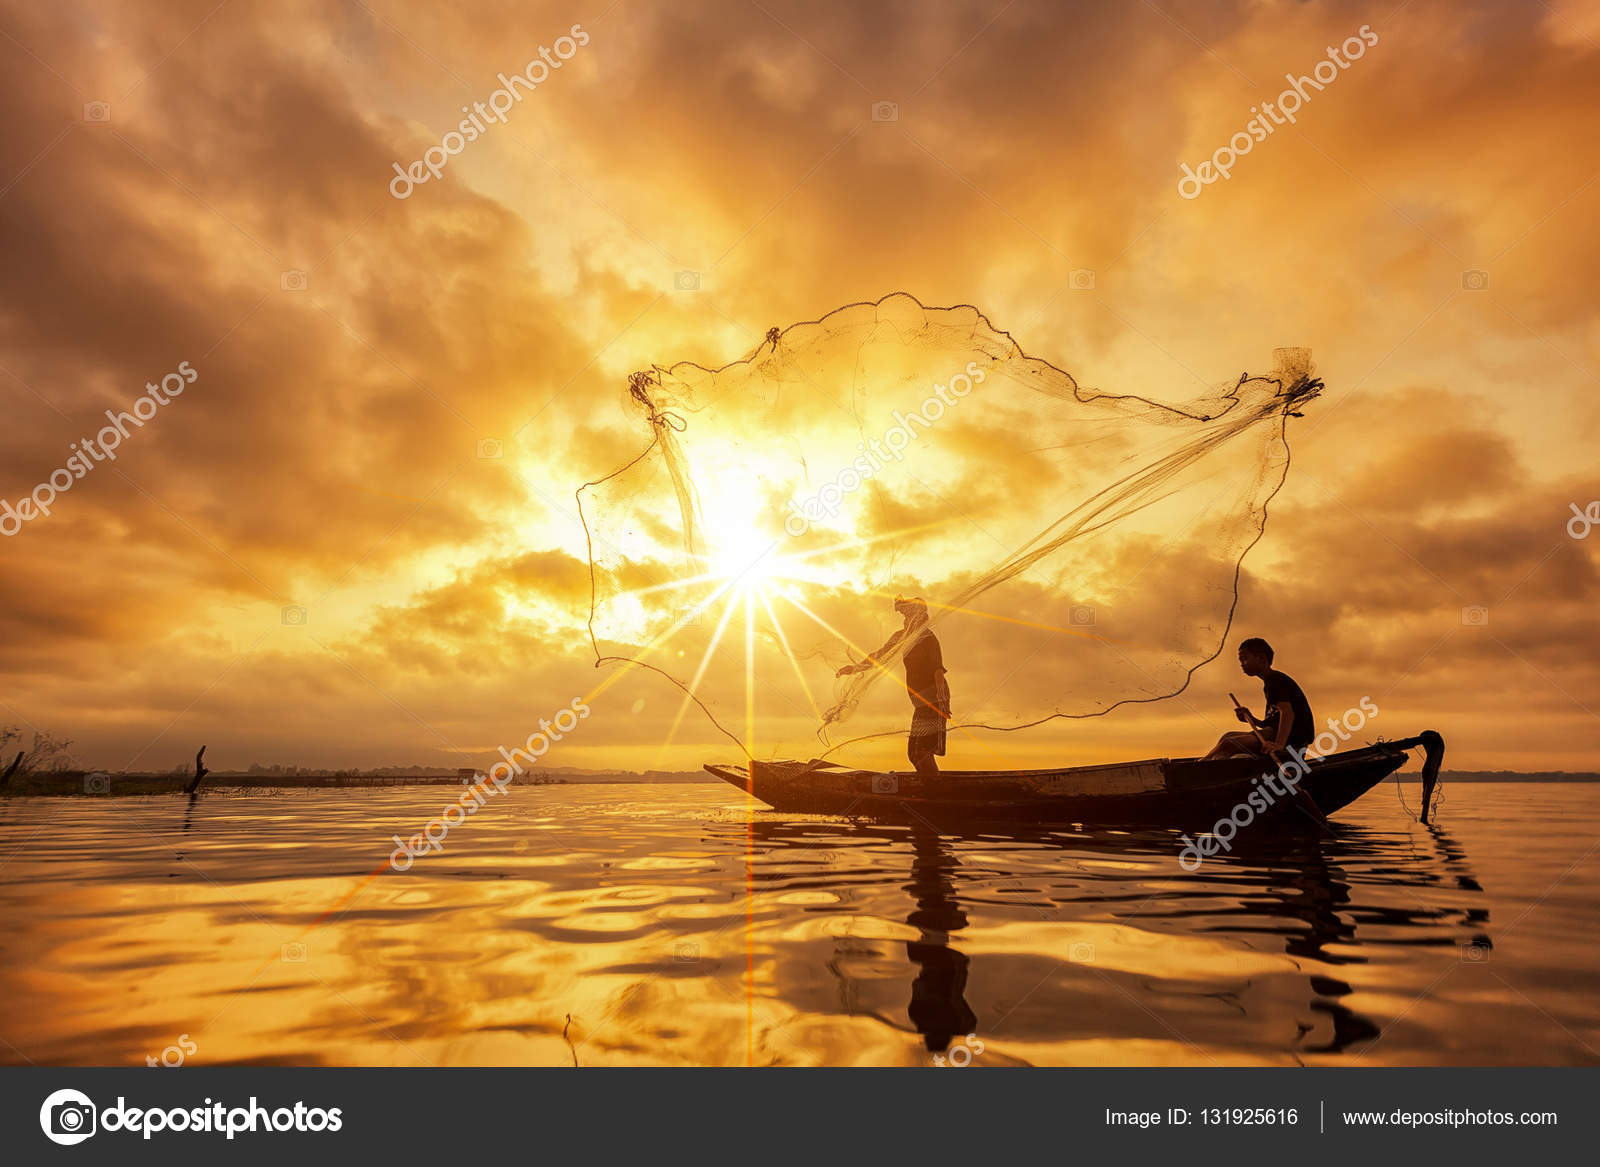 Fishermen casting net for catching fish — Stock Photo © anekoho #131925616